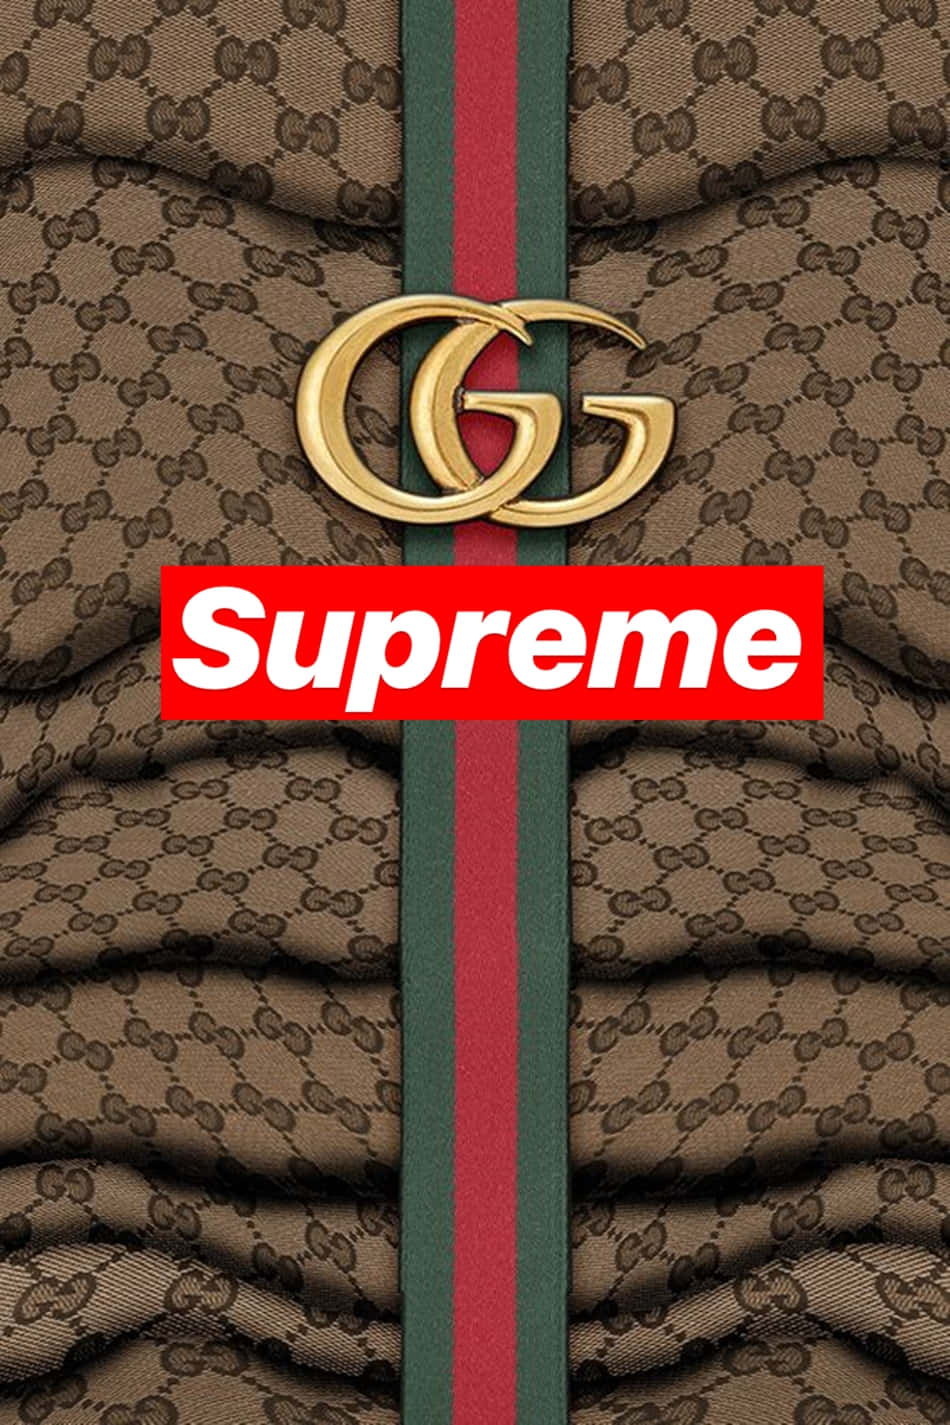 Background Gucci Wallpaper - EnWallpaper